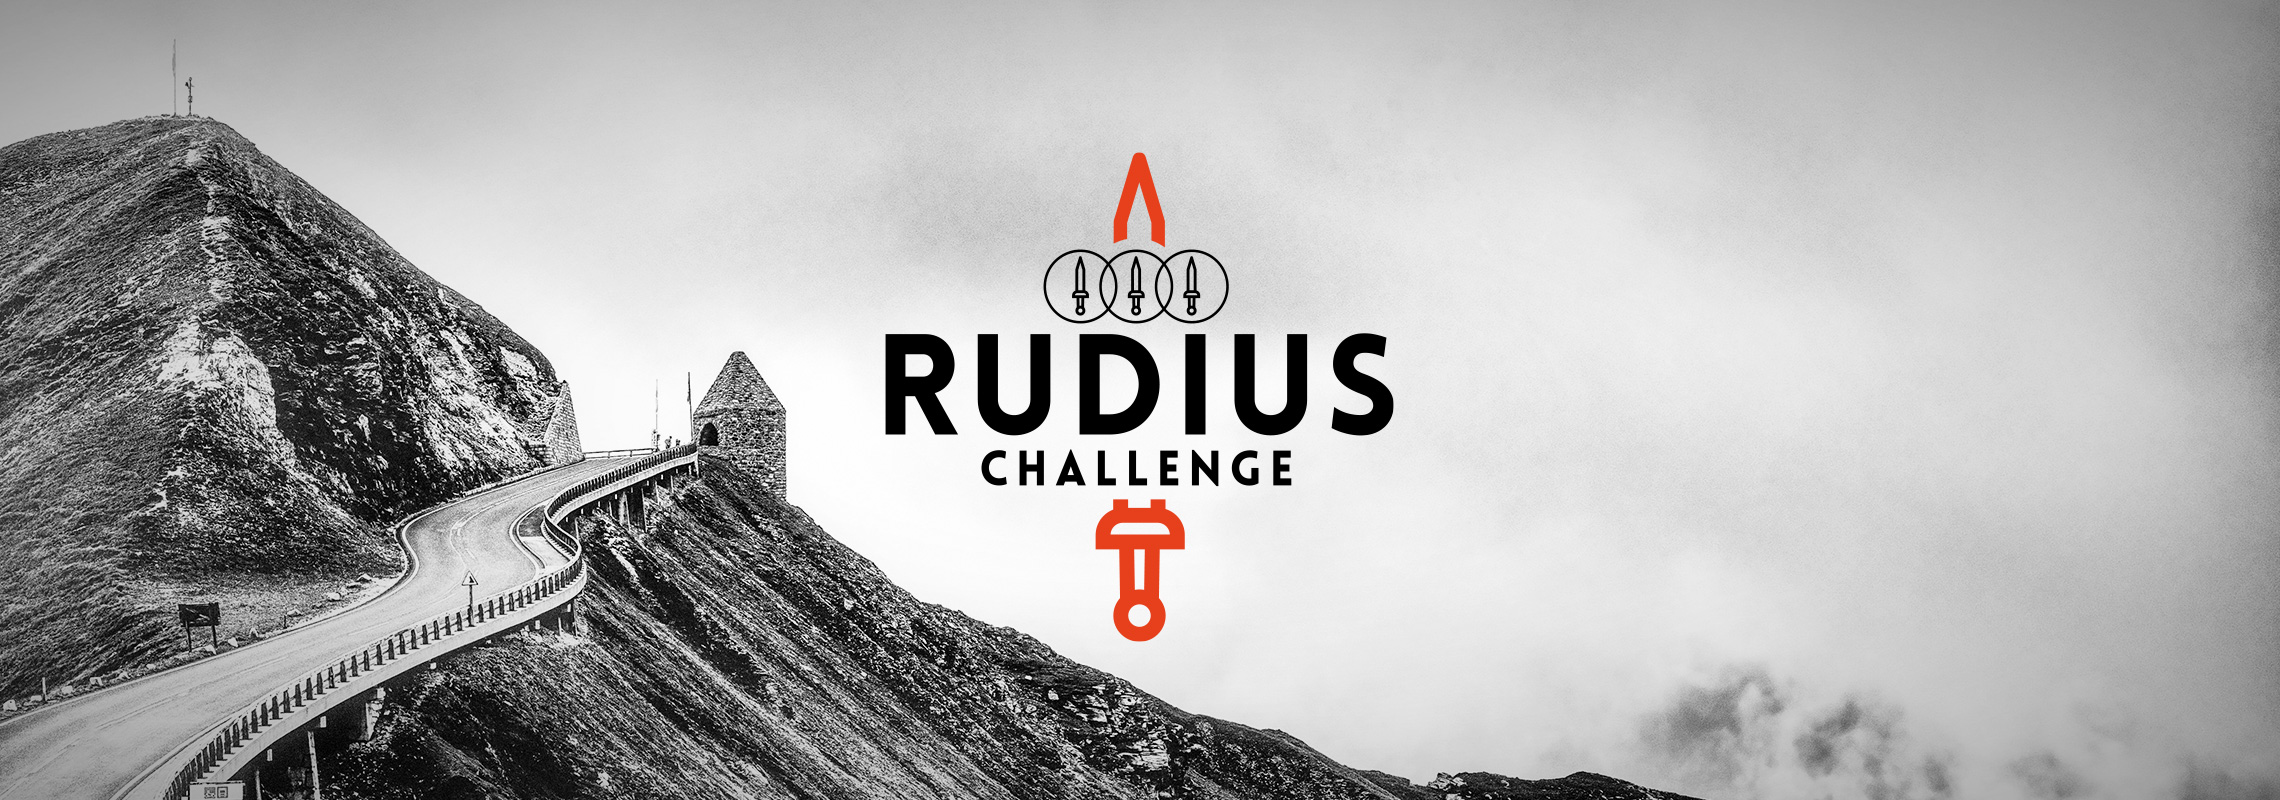 rudius challenge